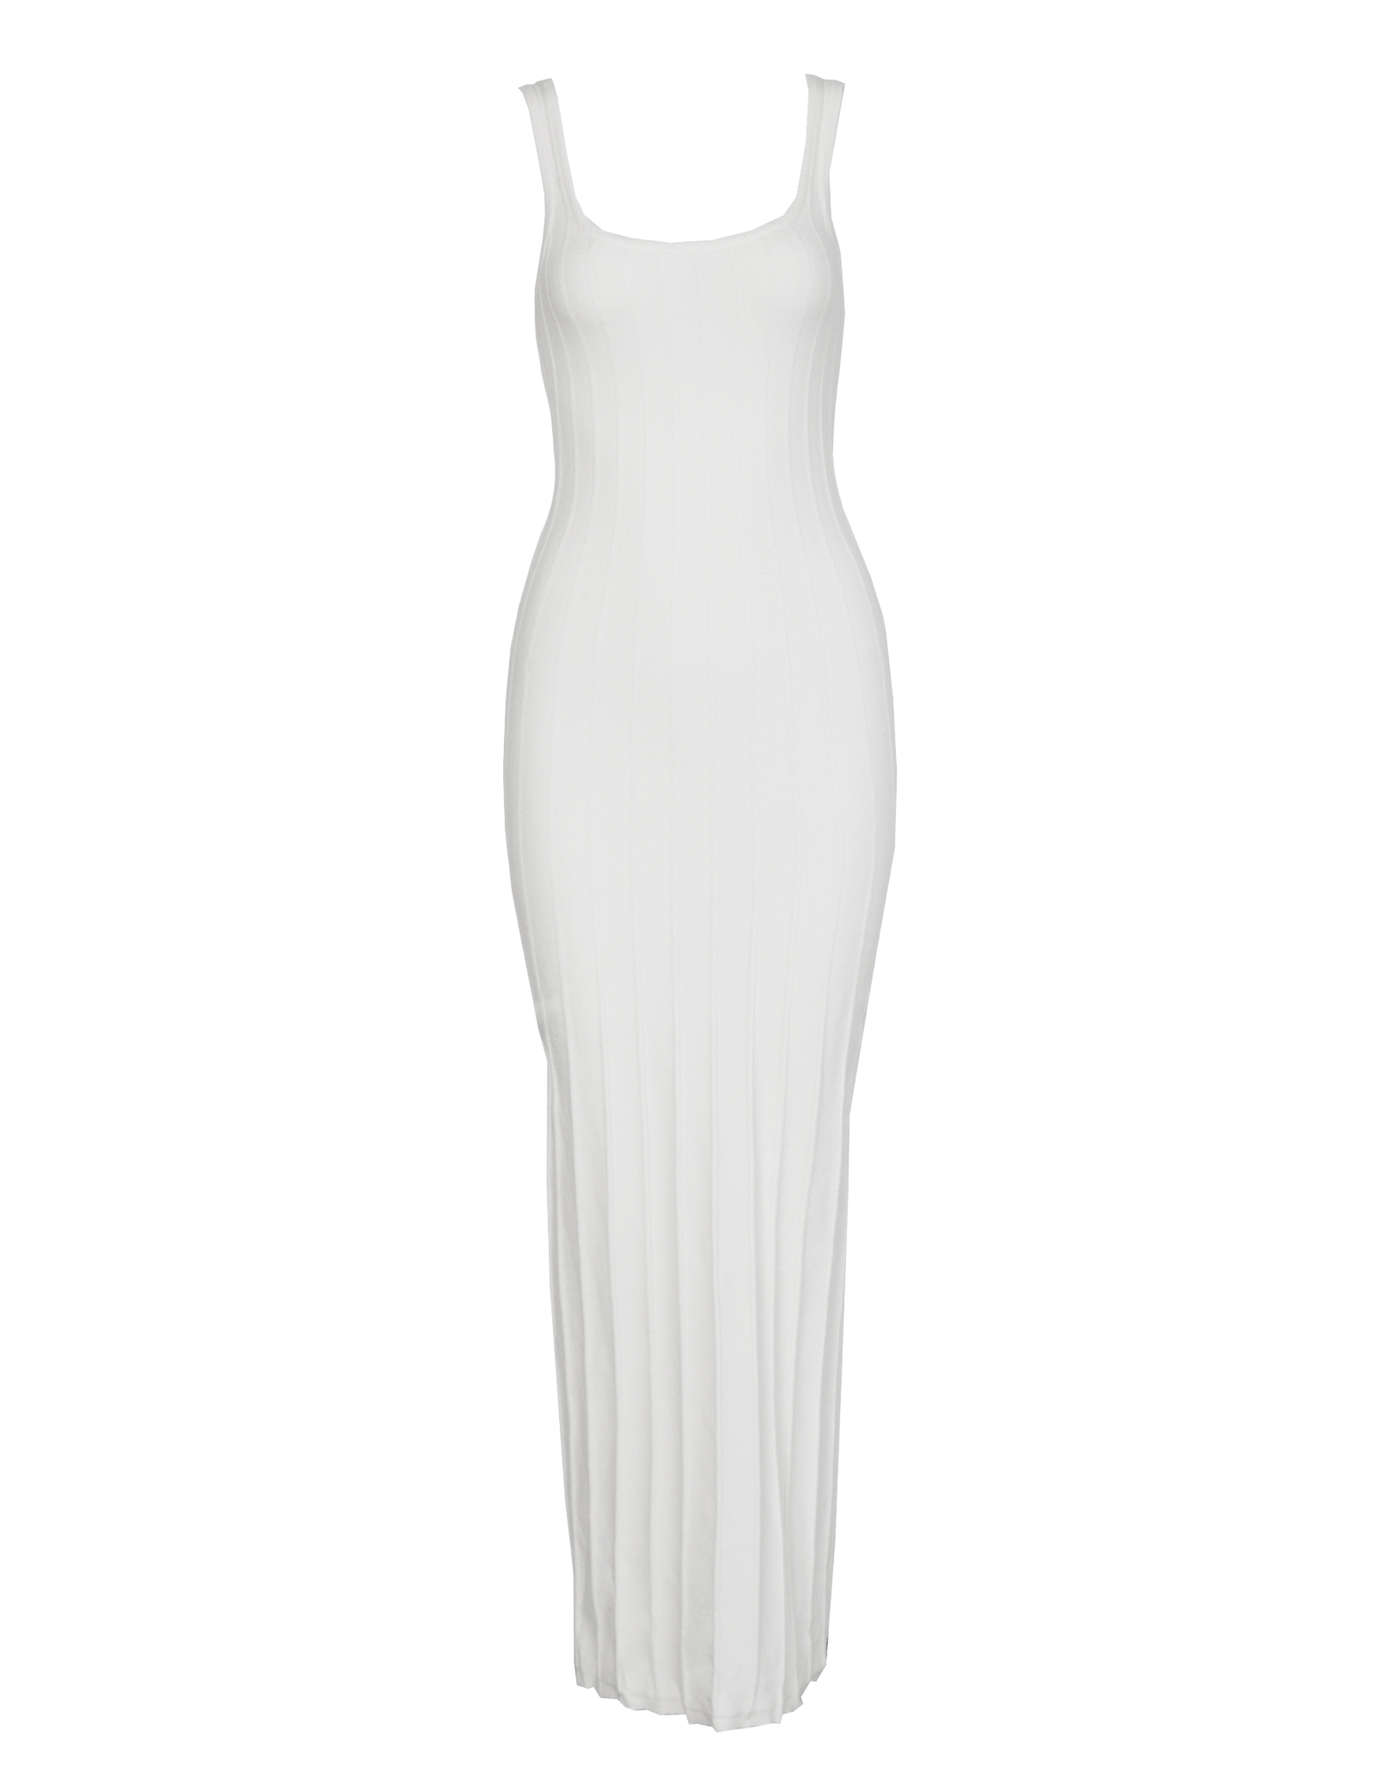 Ephemeral Maxi Dress (Cream) - Cream Knit Maxi Dress - Women's Dress - Charcoal Clothing